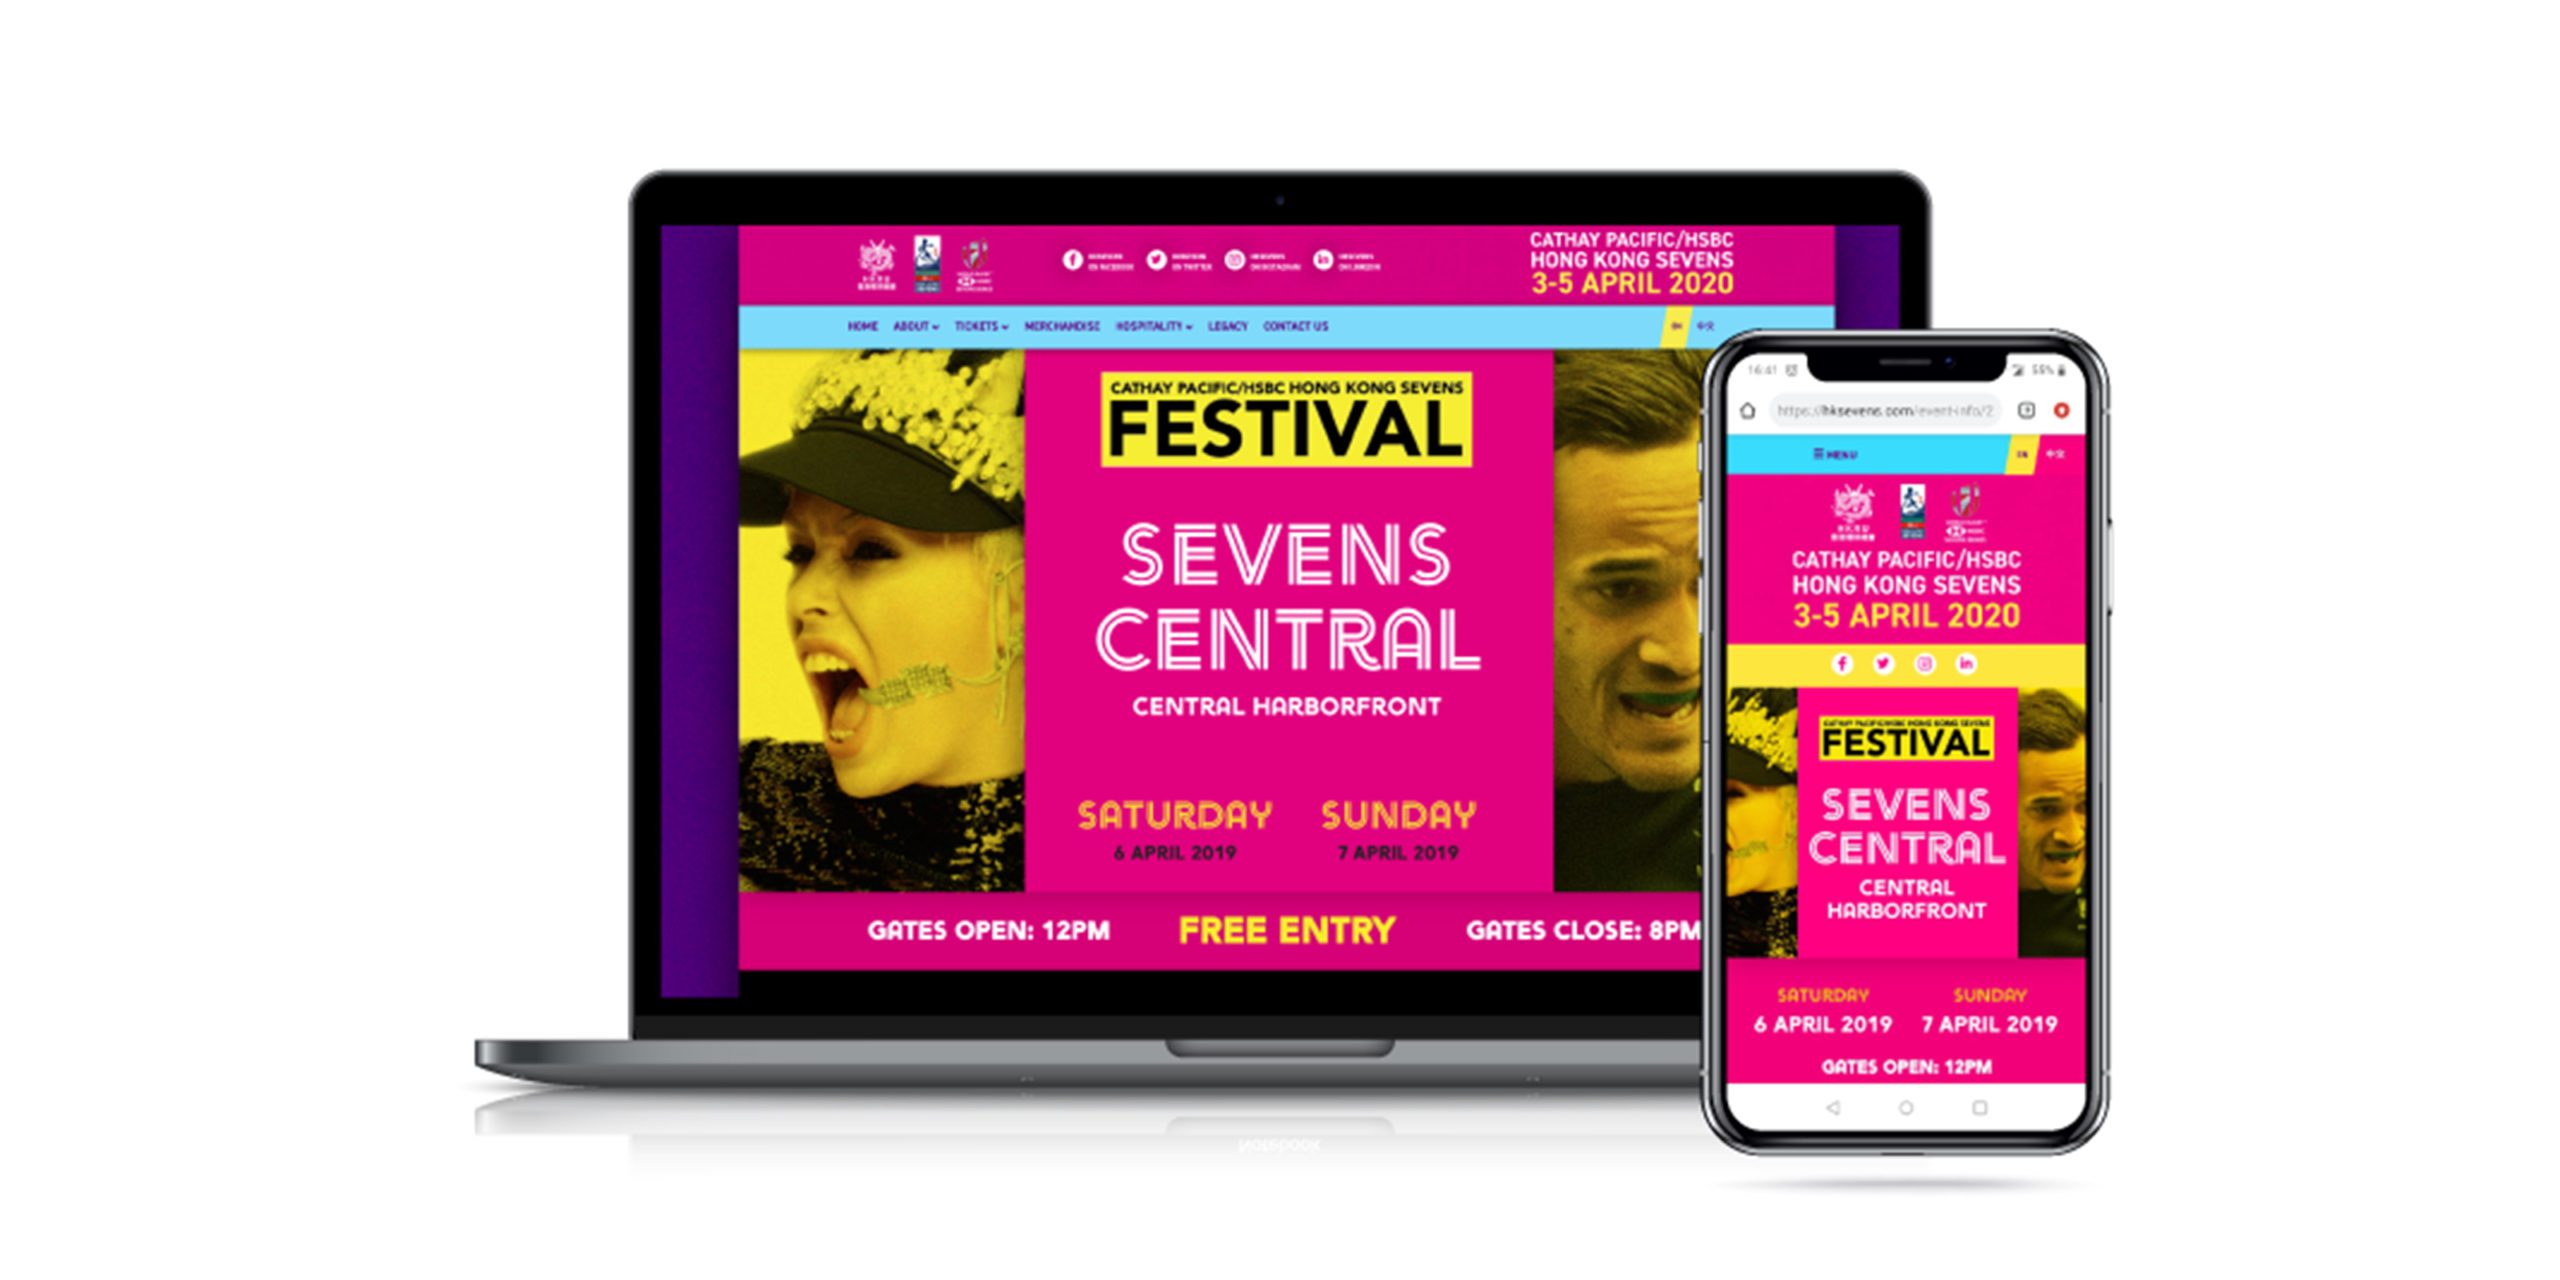 Hong Kong Sevens Festival Events Branding Marketing 2019 Web Design